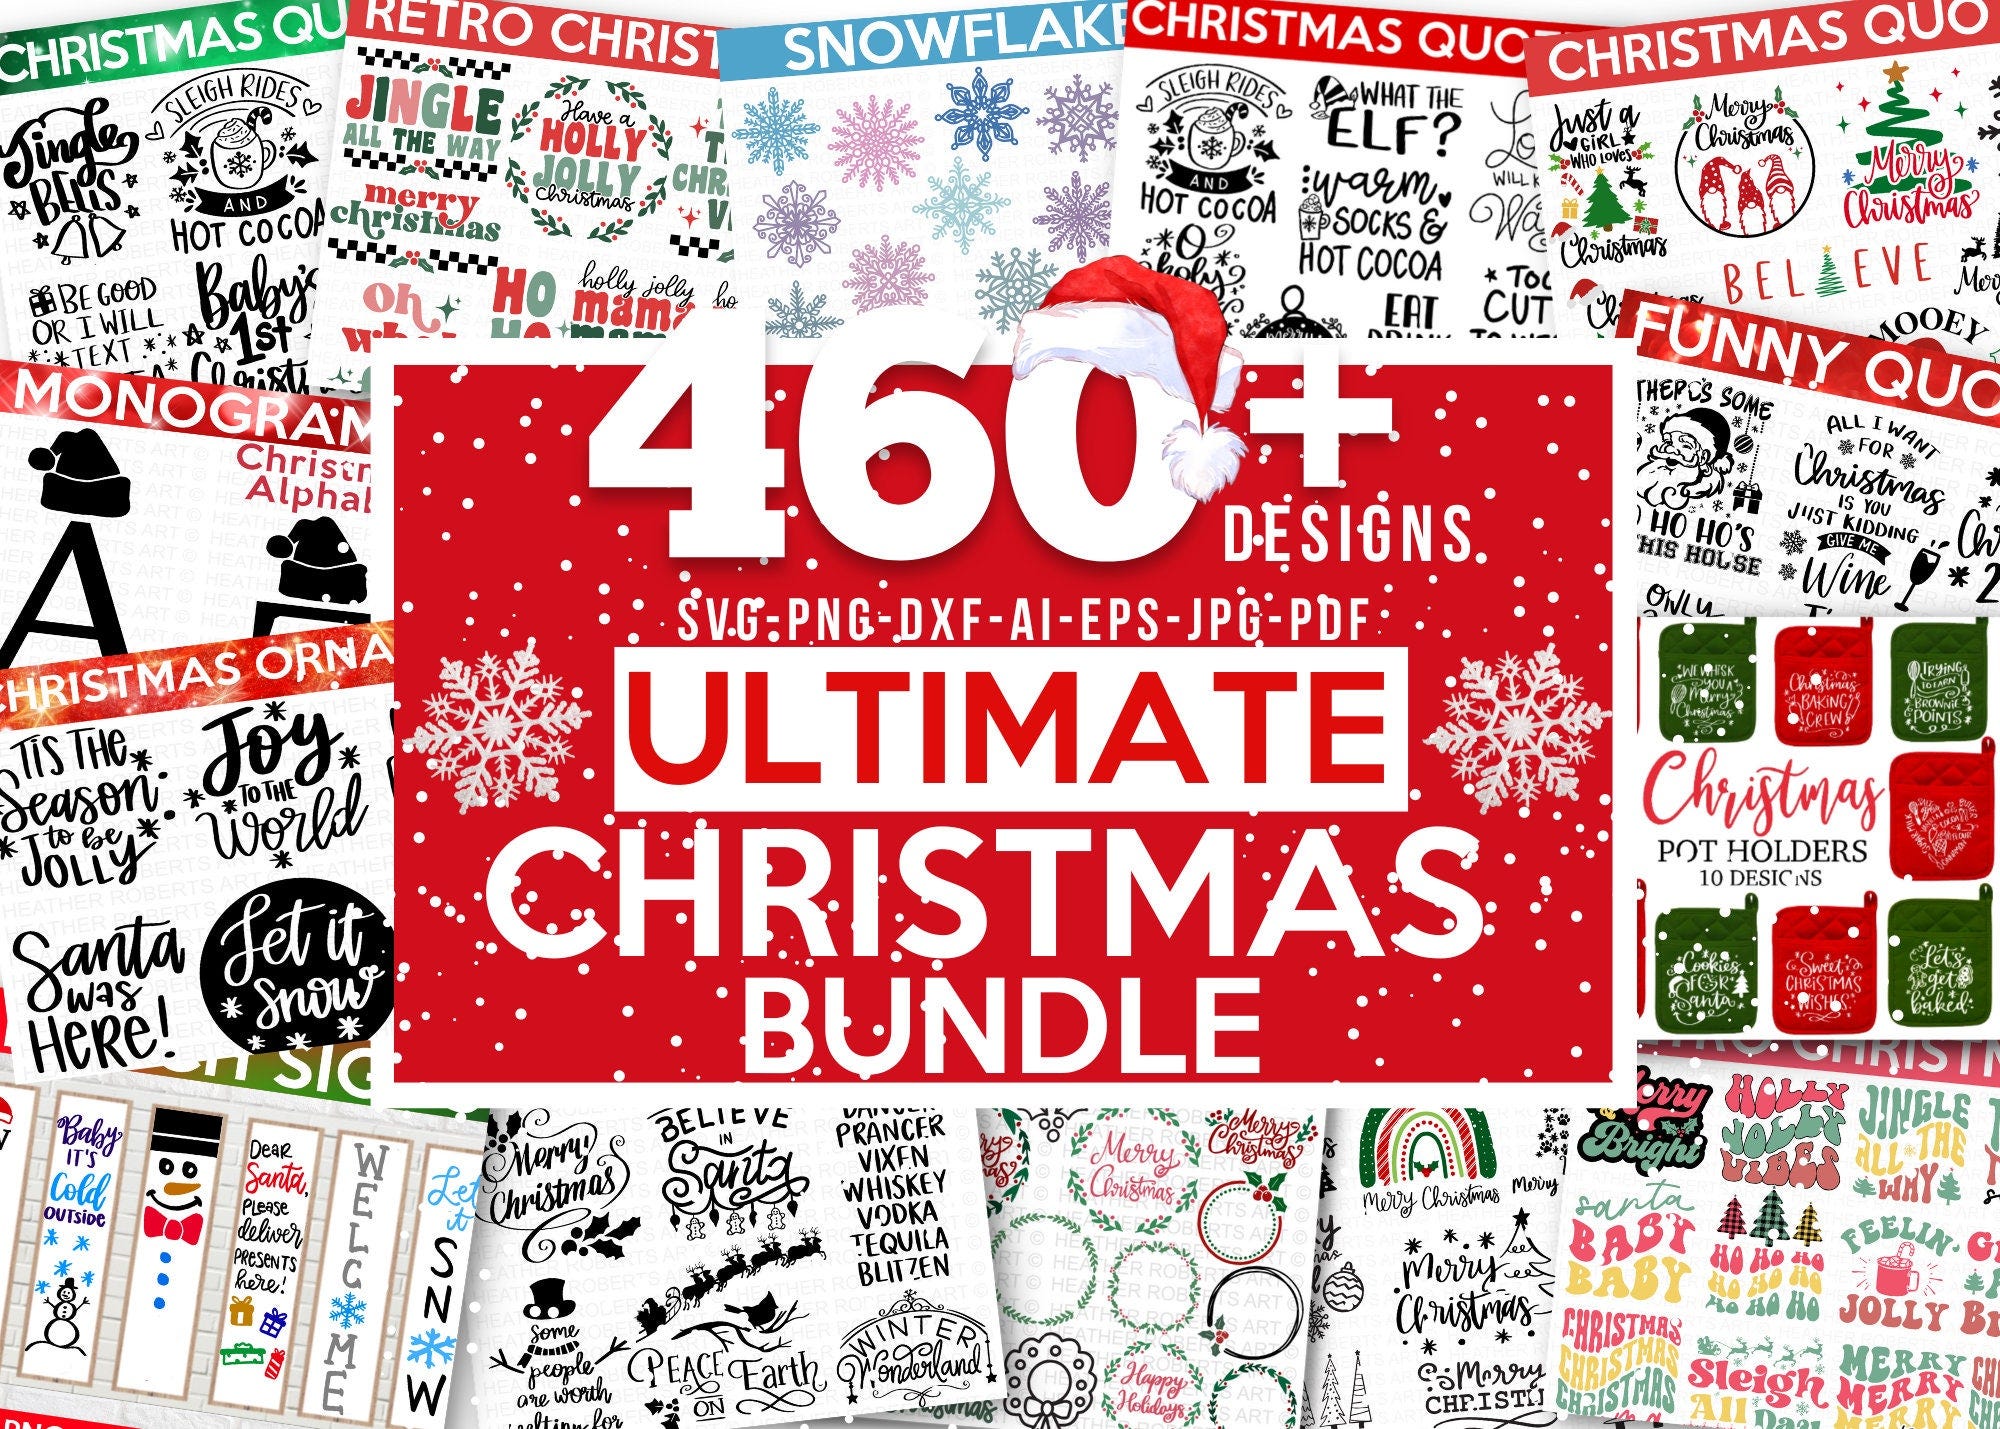 CHRISTMAS ULTIMATE BUNDLE, 460 Designs, Heather Roberts Art Bundle, Christmas svg, Winter svg, Holidays, Cut Files Cricut, Silhouette